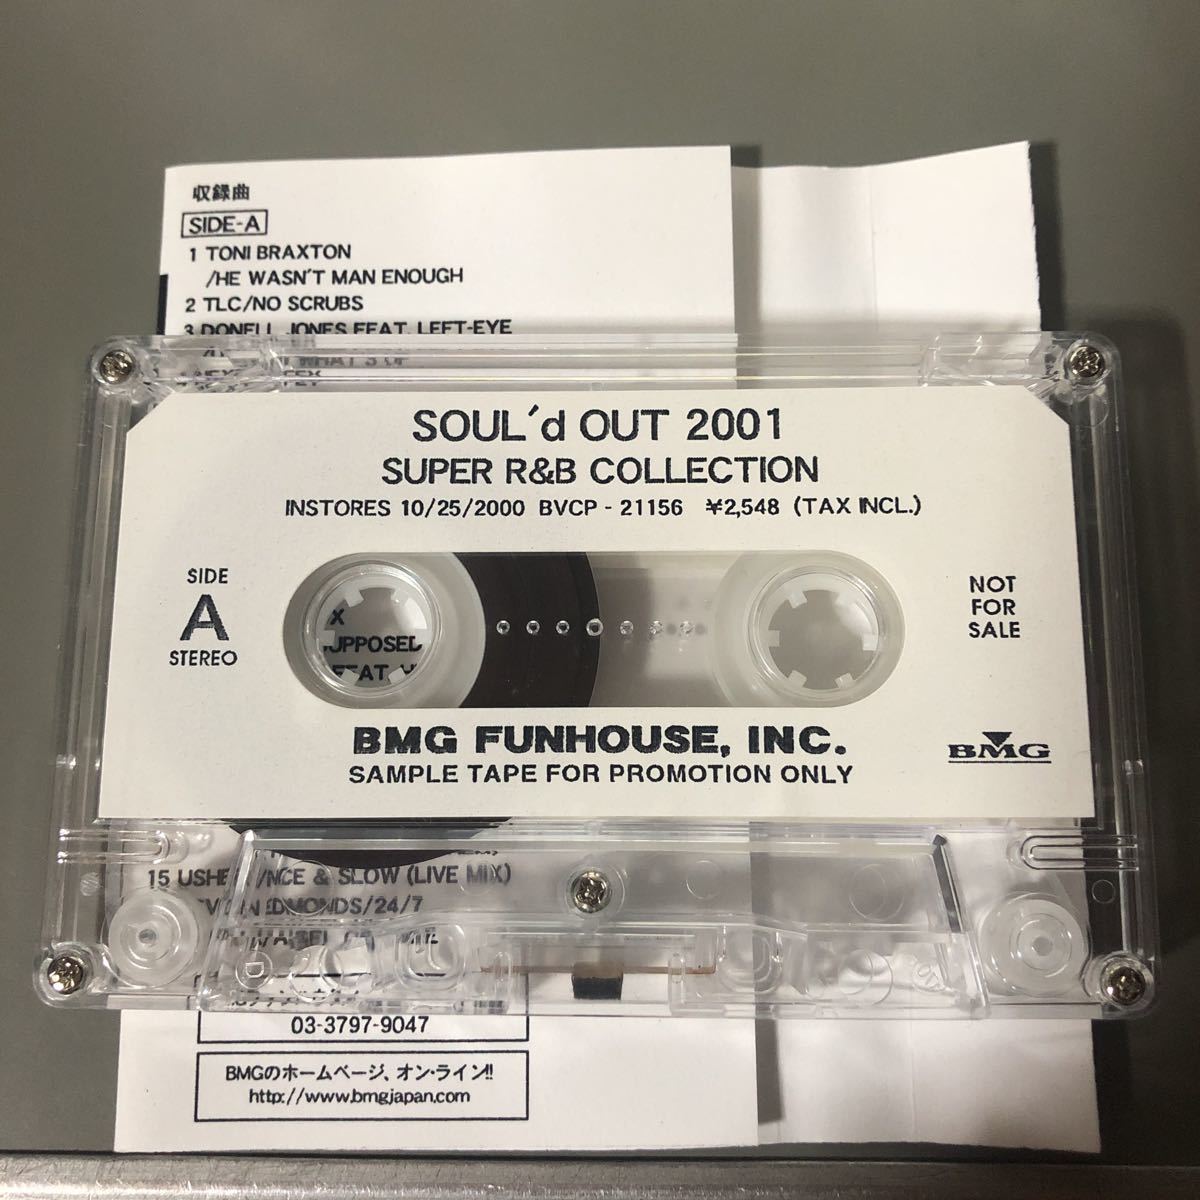 SOUL\'d OUT 2001 super R&B collection [toni*blak stone,TLC, moni ka, other ] domestic record cassette tape [ Pro motion for ]^